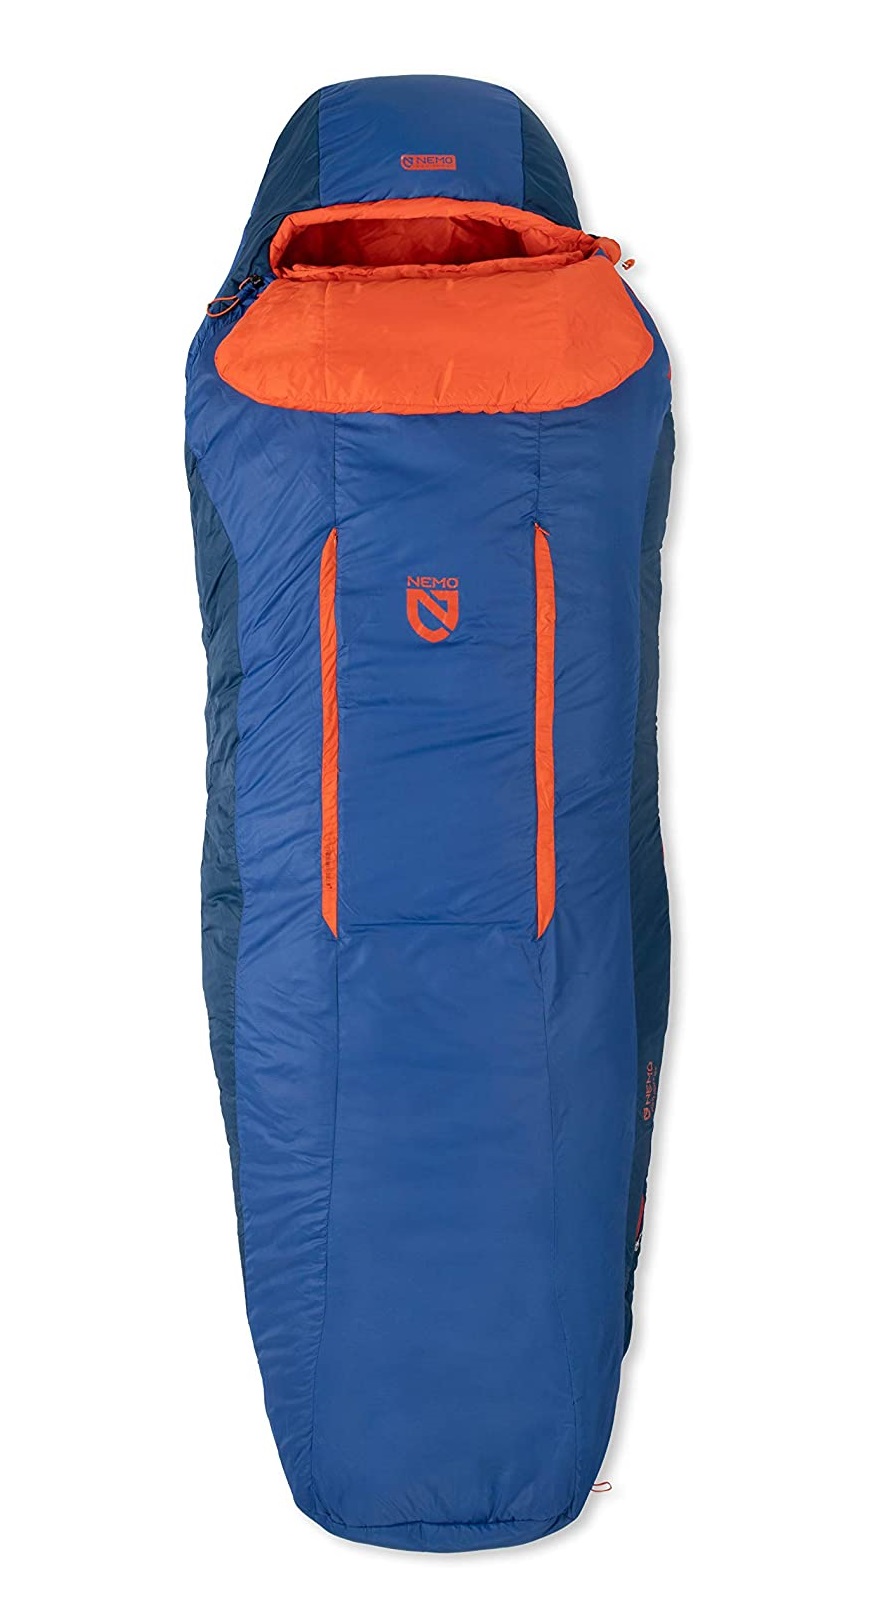 Warm Weather Camping Hiking Light Weight Compact Sleeping Bag 72x28 